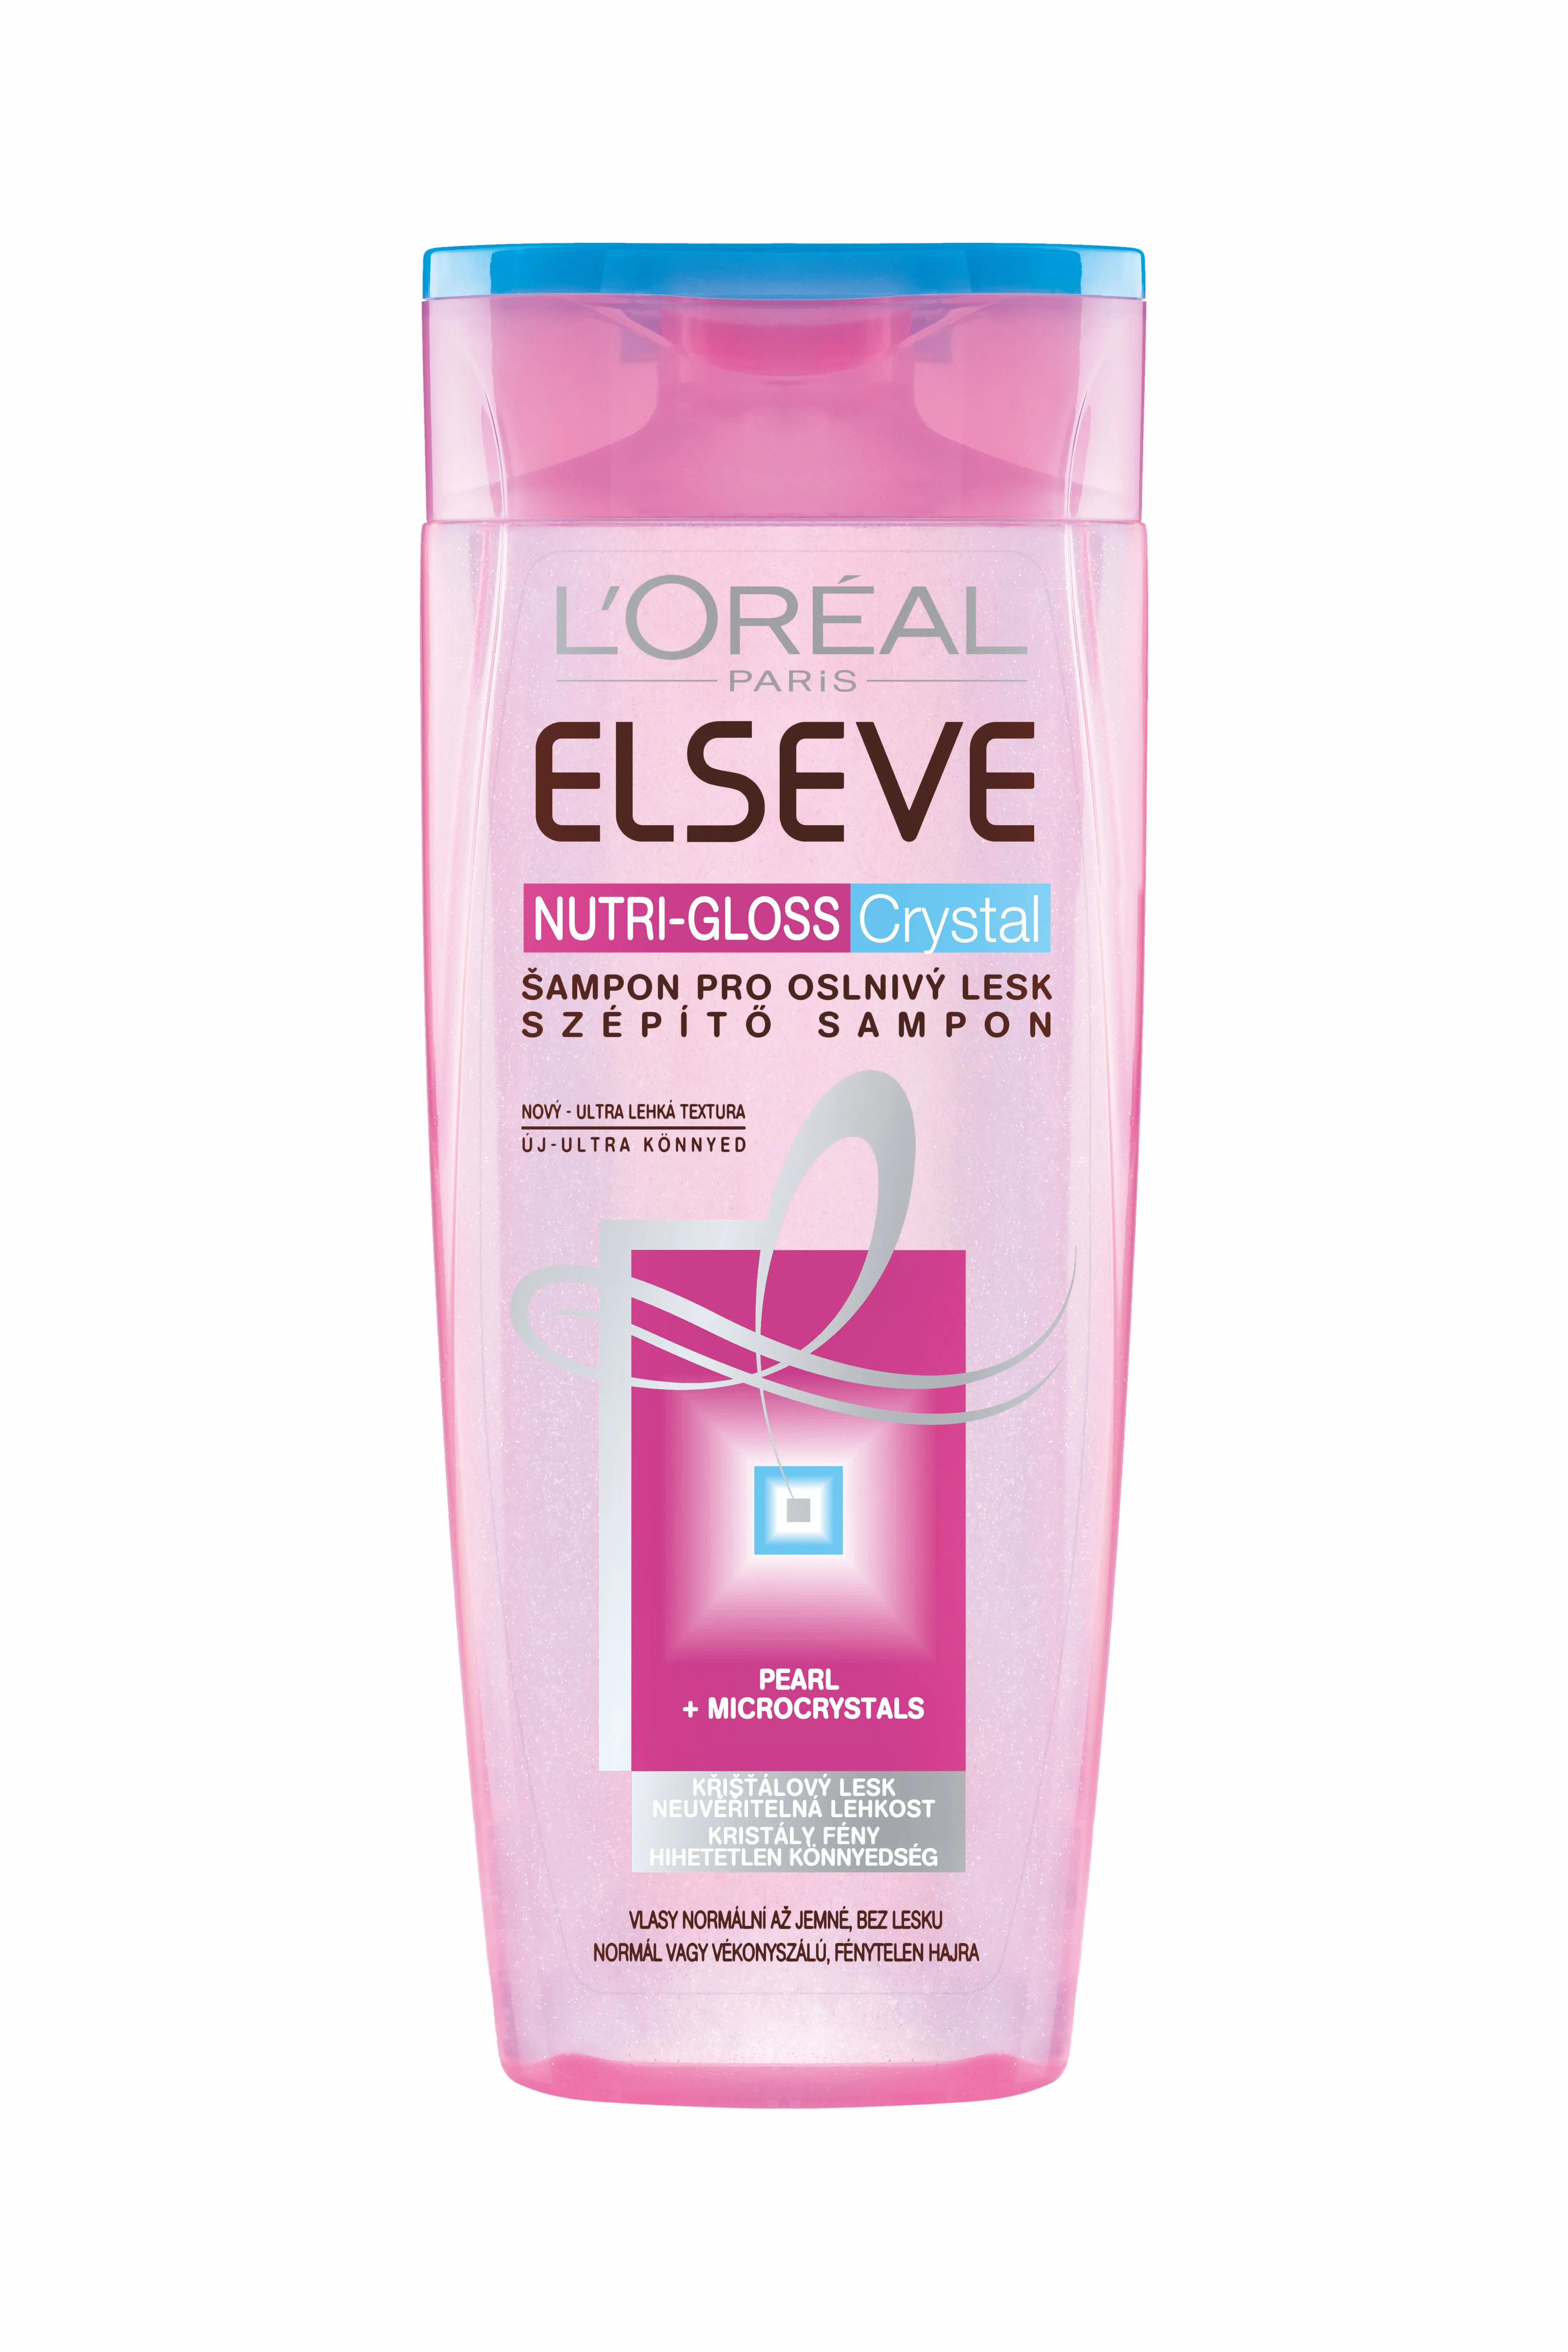 L'Oréal Paris Elseve Nutri-Gloss Crystal šampon pro oslnivý lesk 250ml